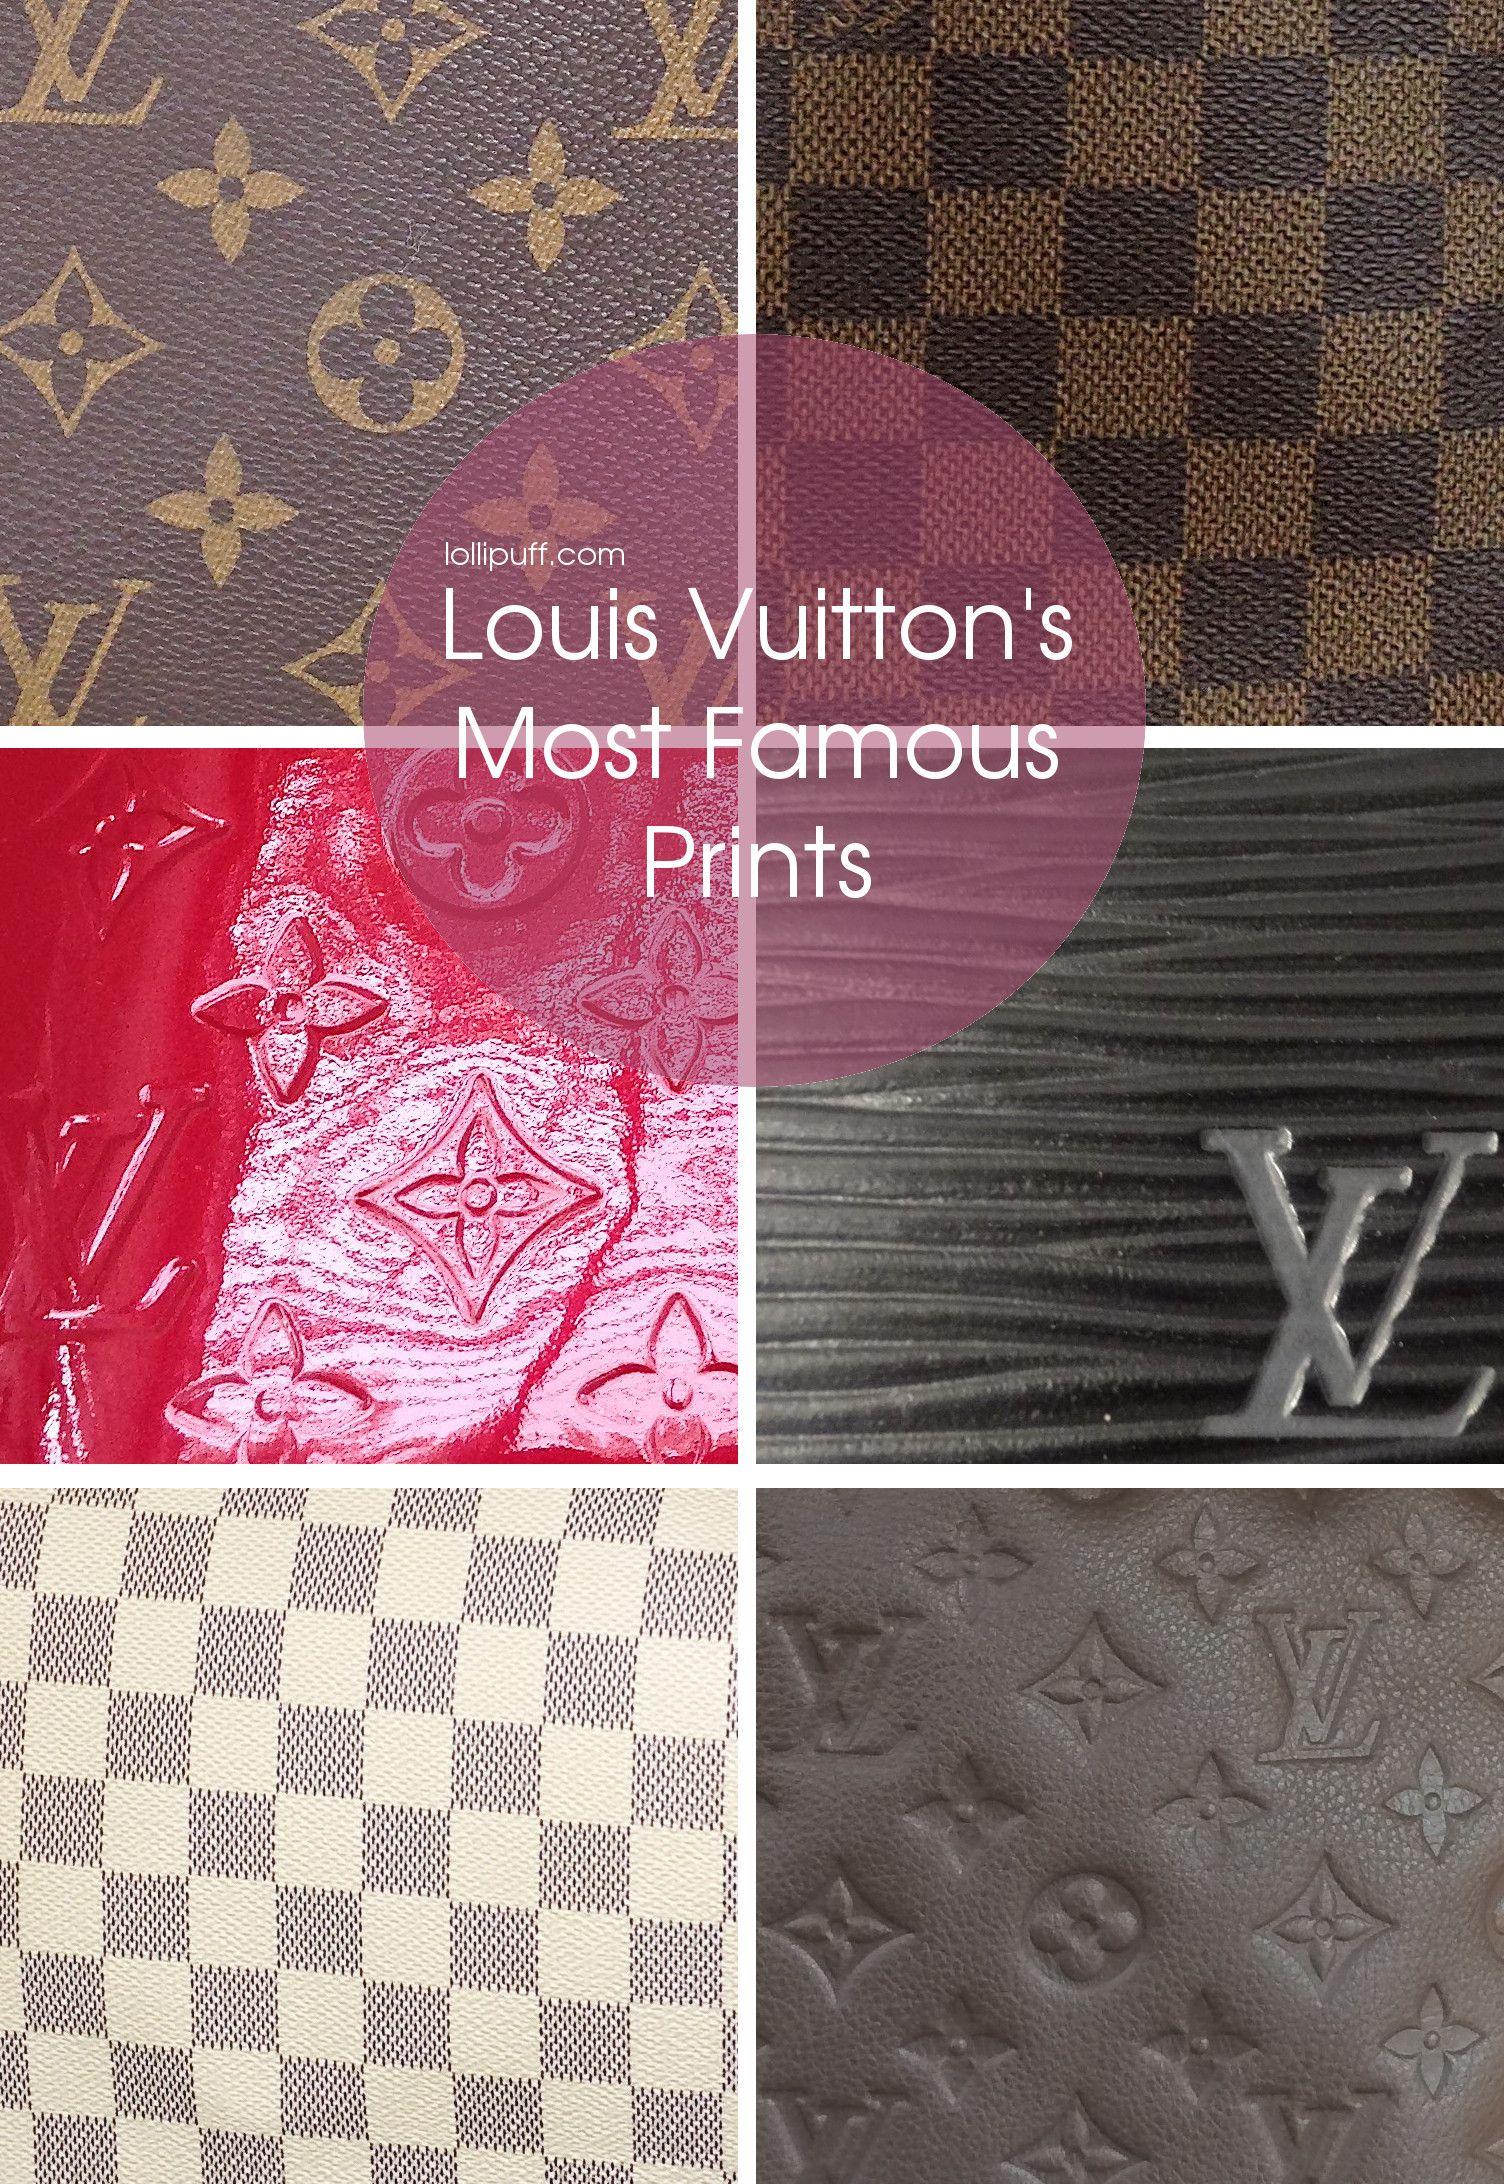 Louis Vuitton Leather Logo - Different Louis Vuitton Prints and Patterns